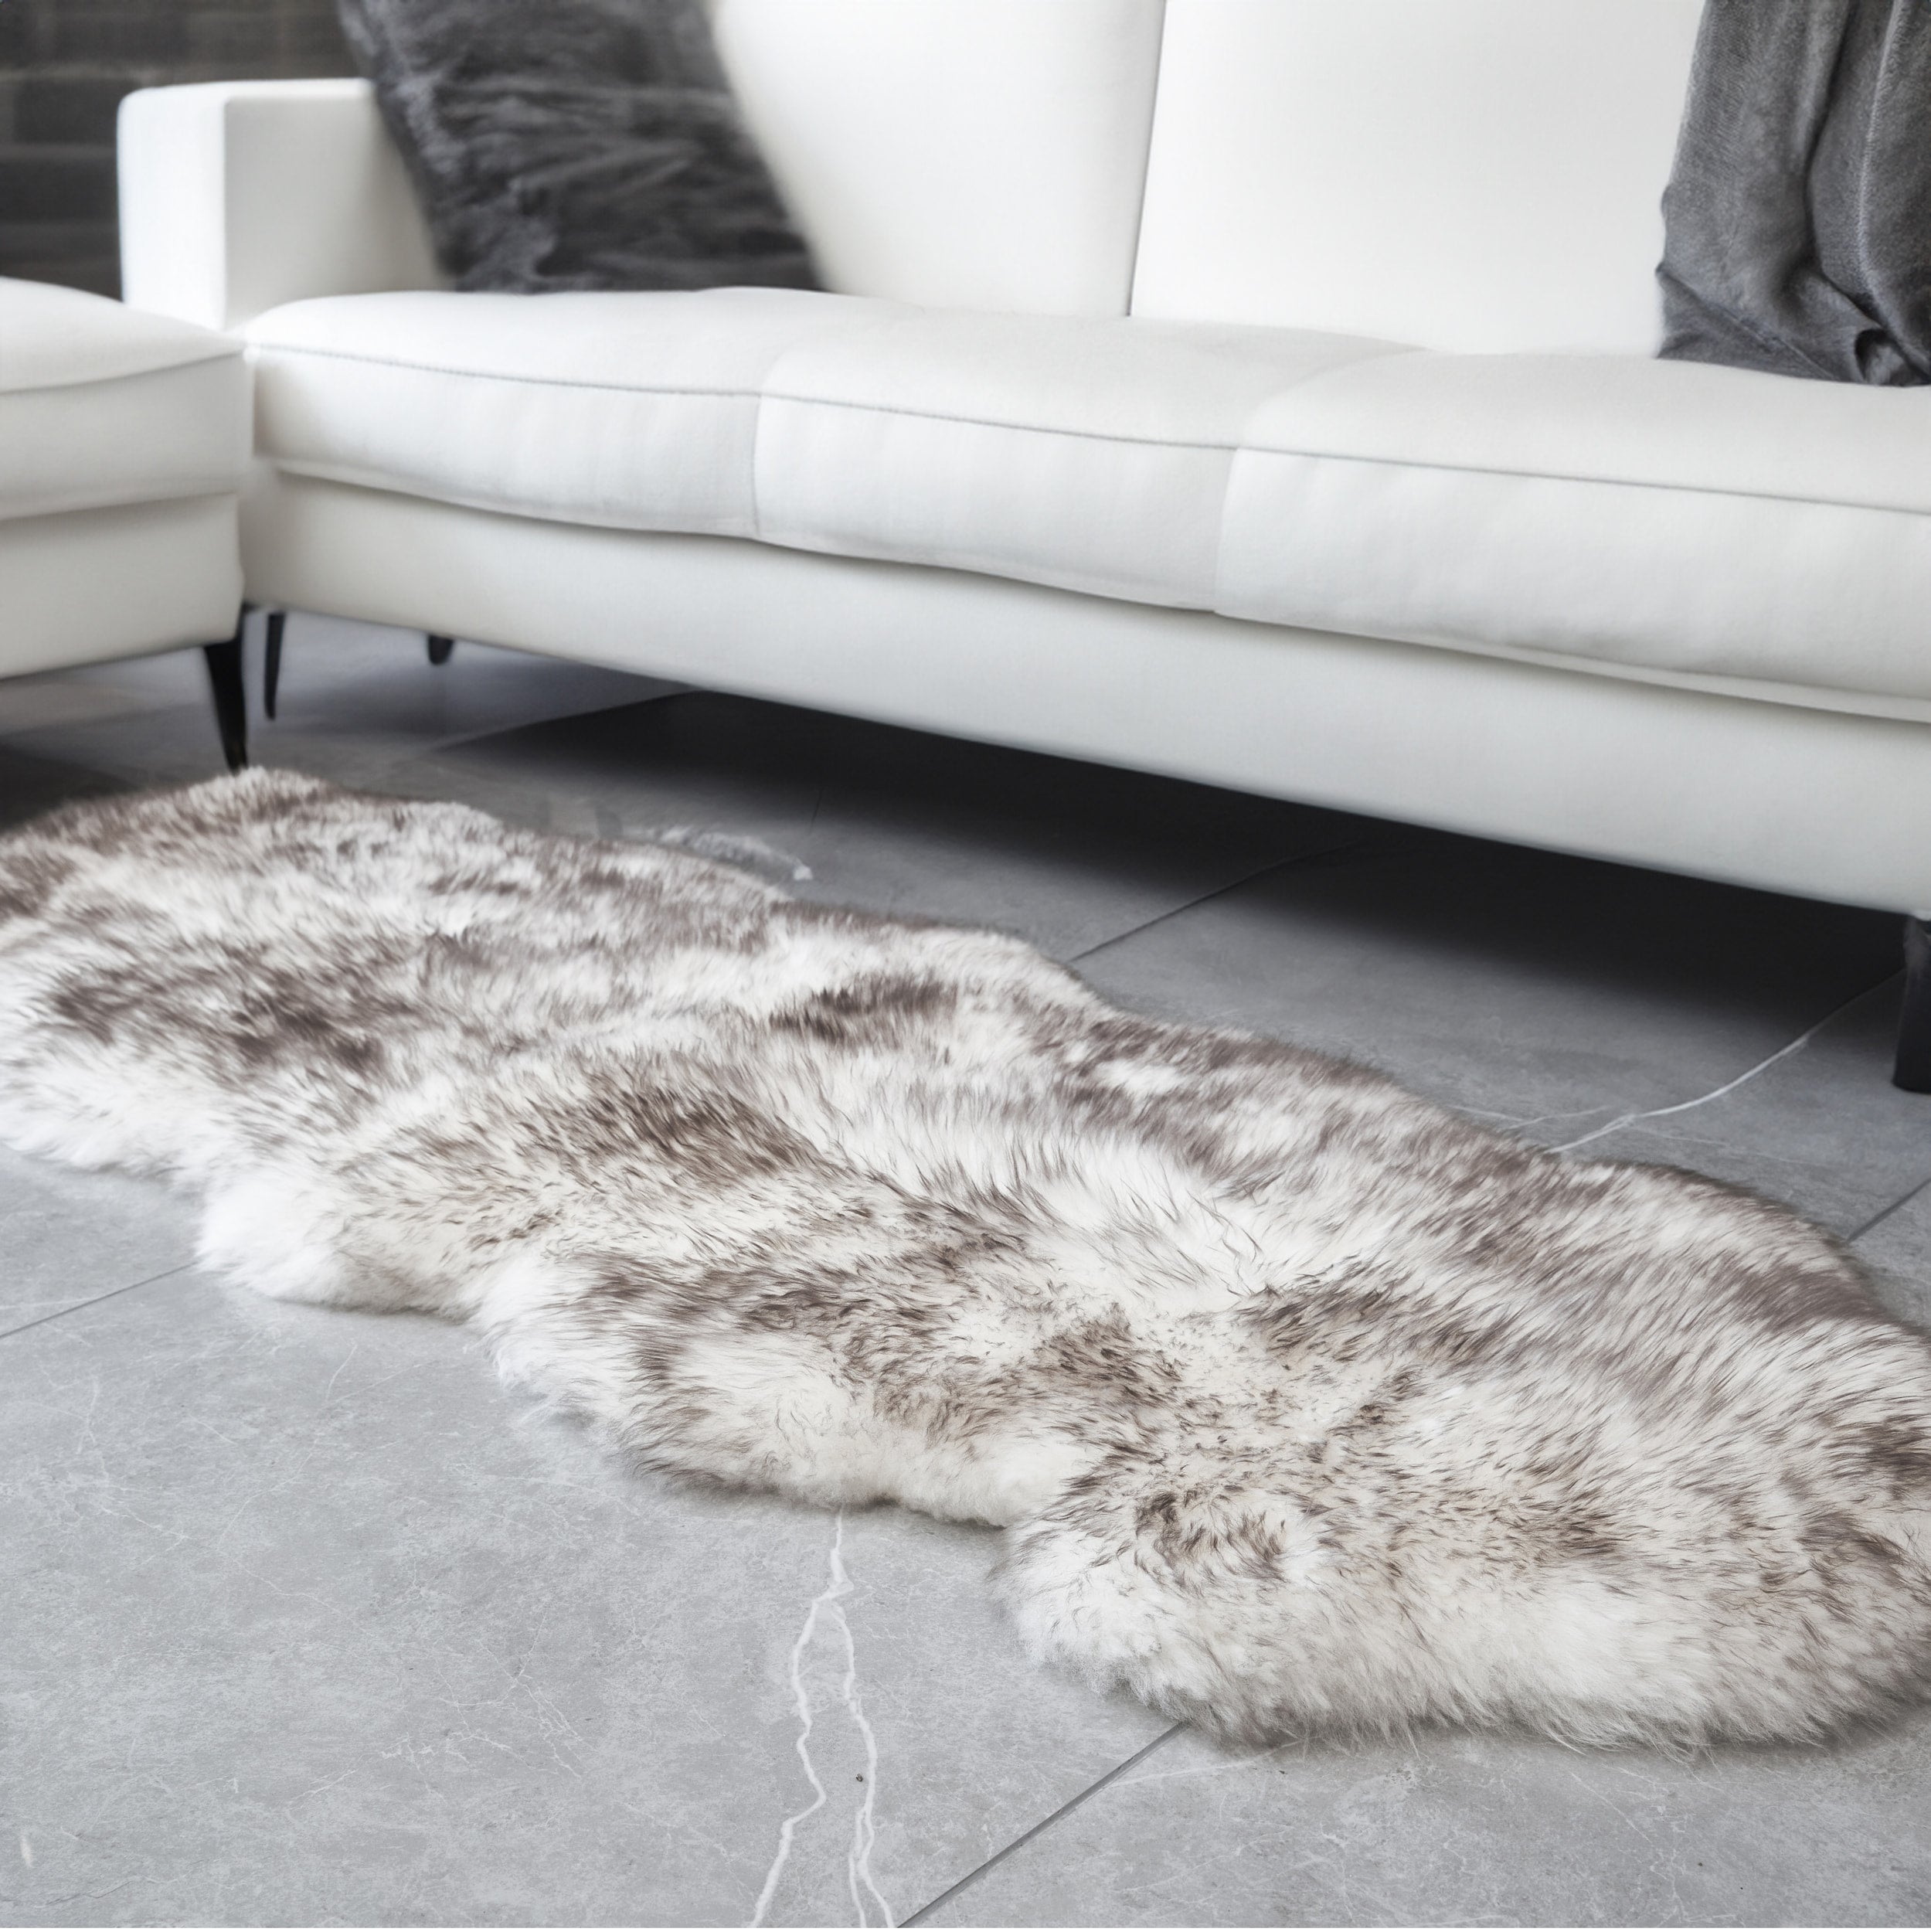 Natural Sheepskin Rug Shearling Fur Pelt Shaggy Carpet #color_Wolf Tipped